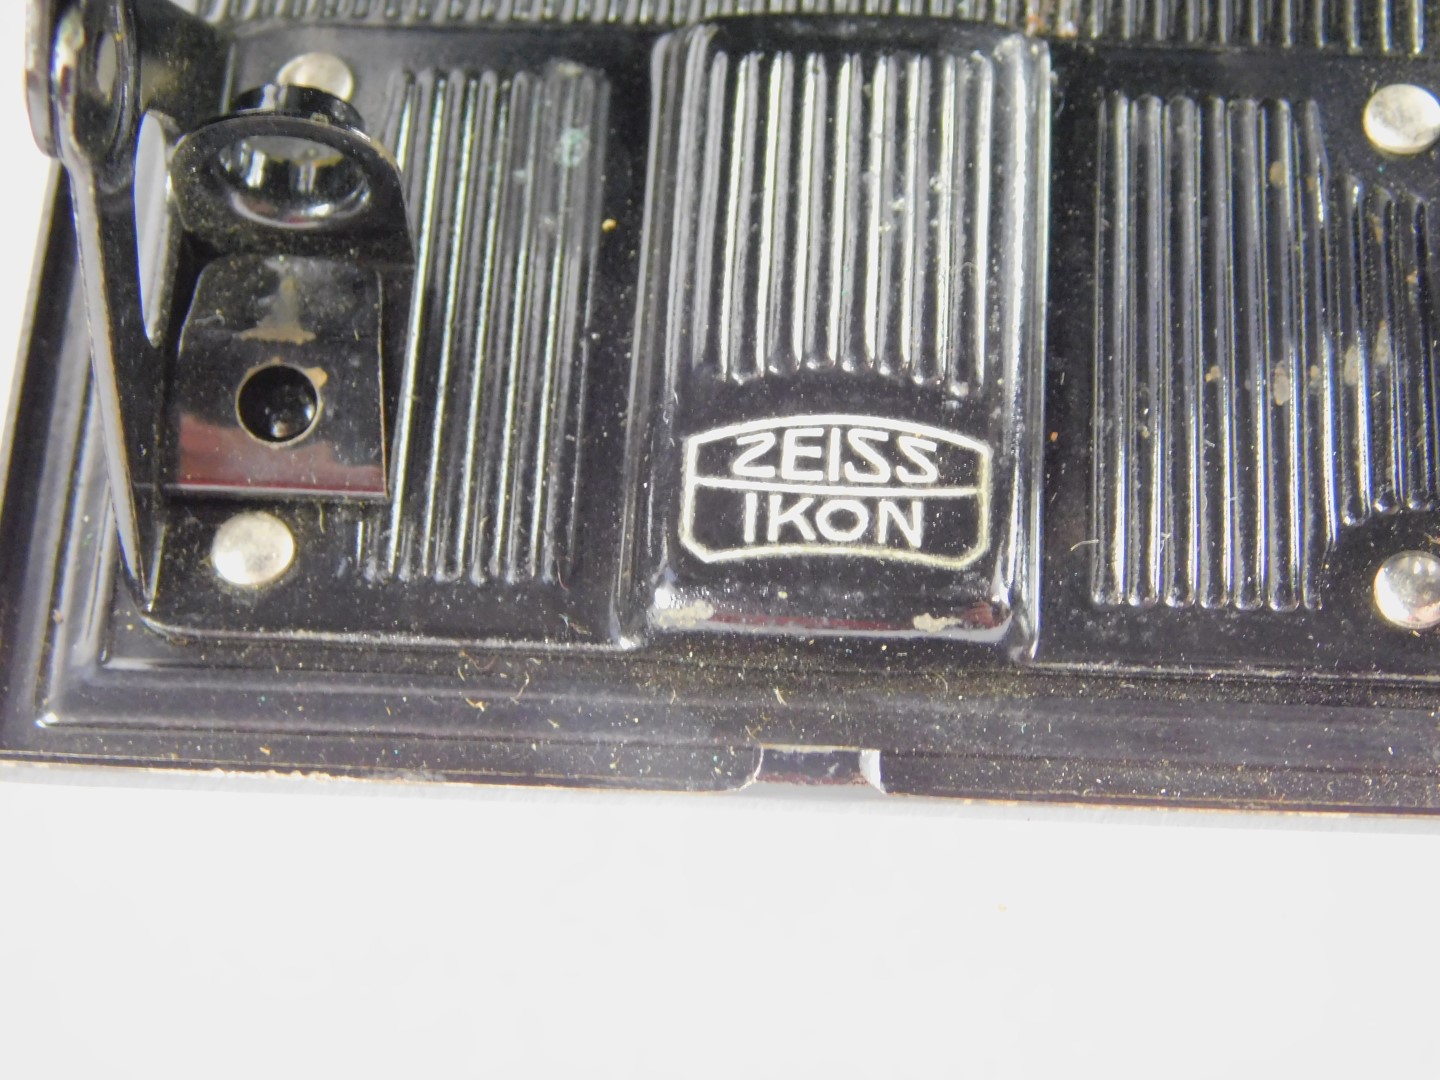 A Ziess Ikon Ikonta camera, with a Novar - Anstigmat 1:6, 3F=10, 5cm lens, no 1032789, cased. - Image 2 of 2